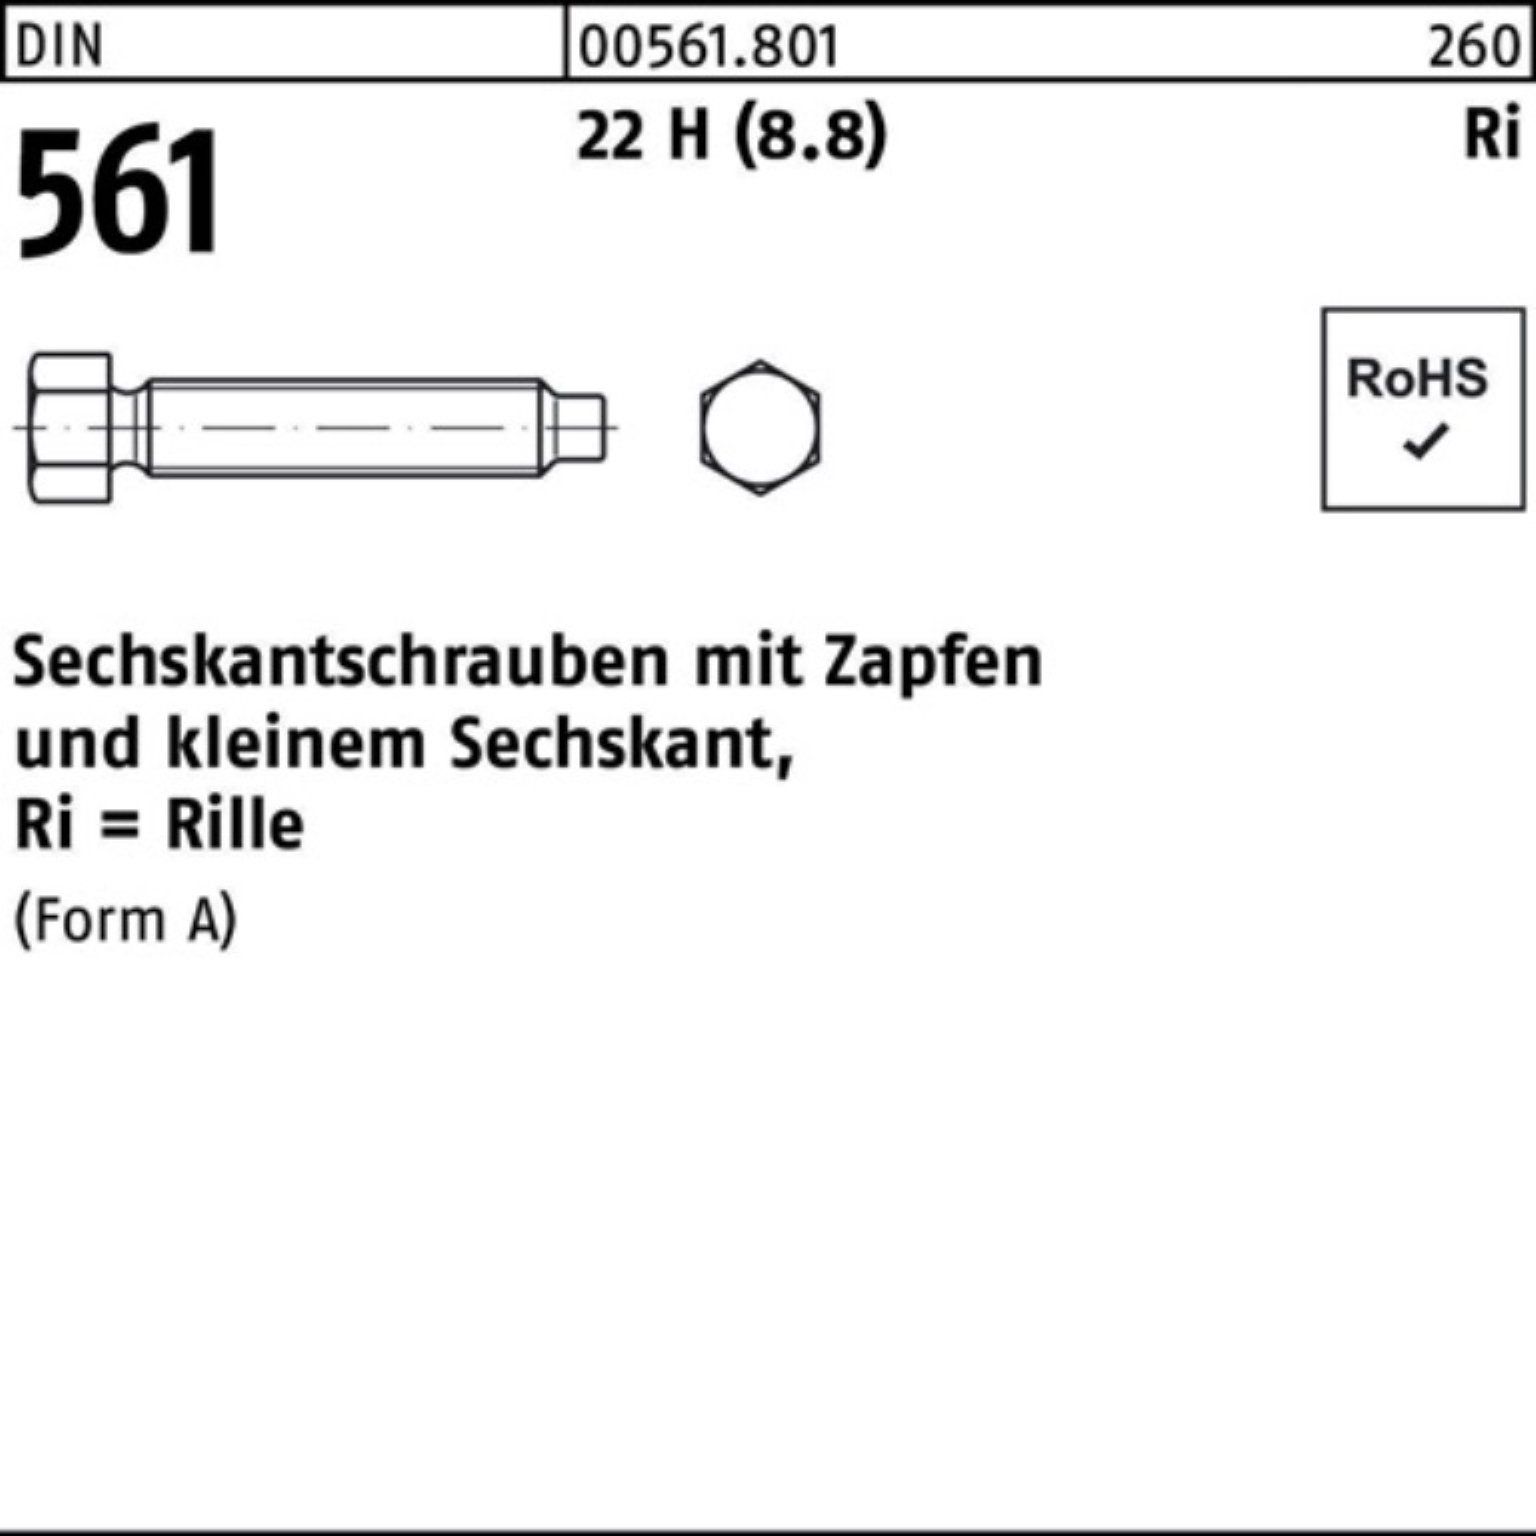 Reyher Sechskantschraube 100er Pack Sechskantschraube DIN 561 Zapfen AM 6x 20 22 H (8.8) 100 St